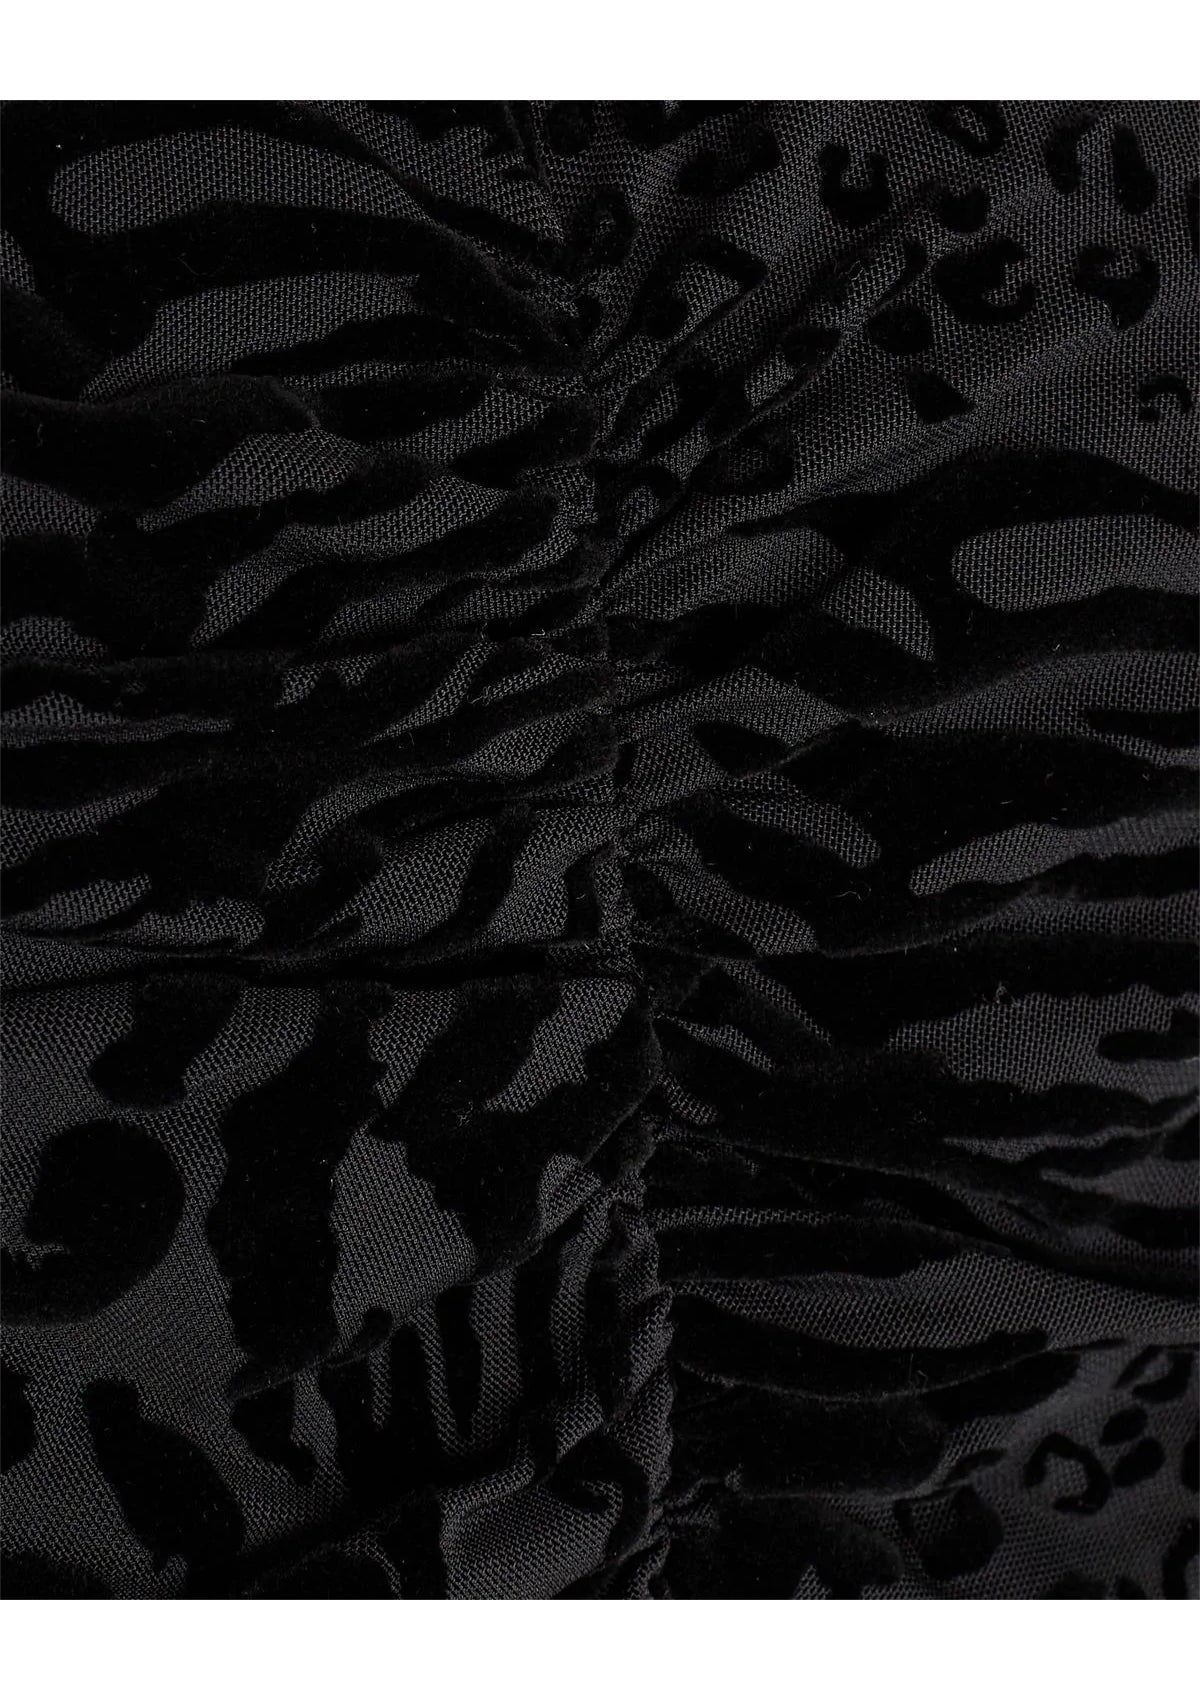 Sofie Schnoor Black Printed Velvet Midi Dress